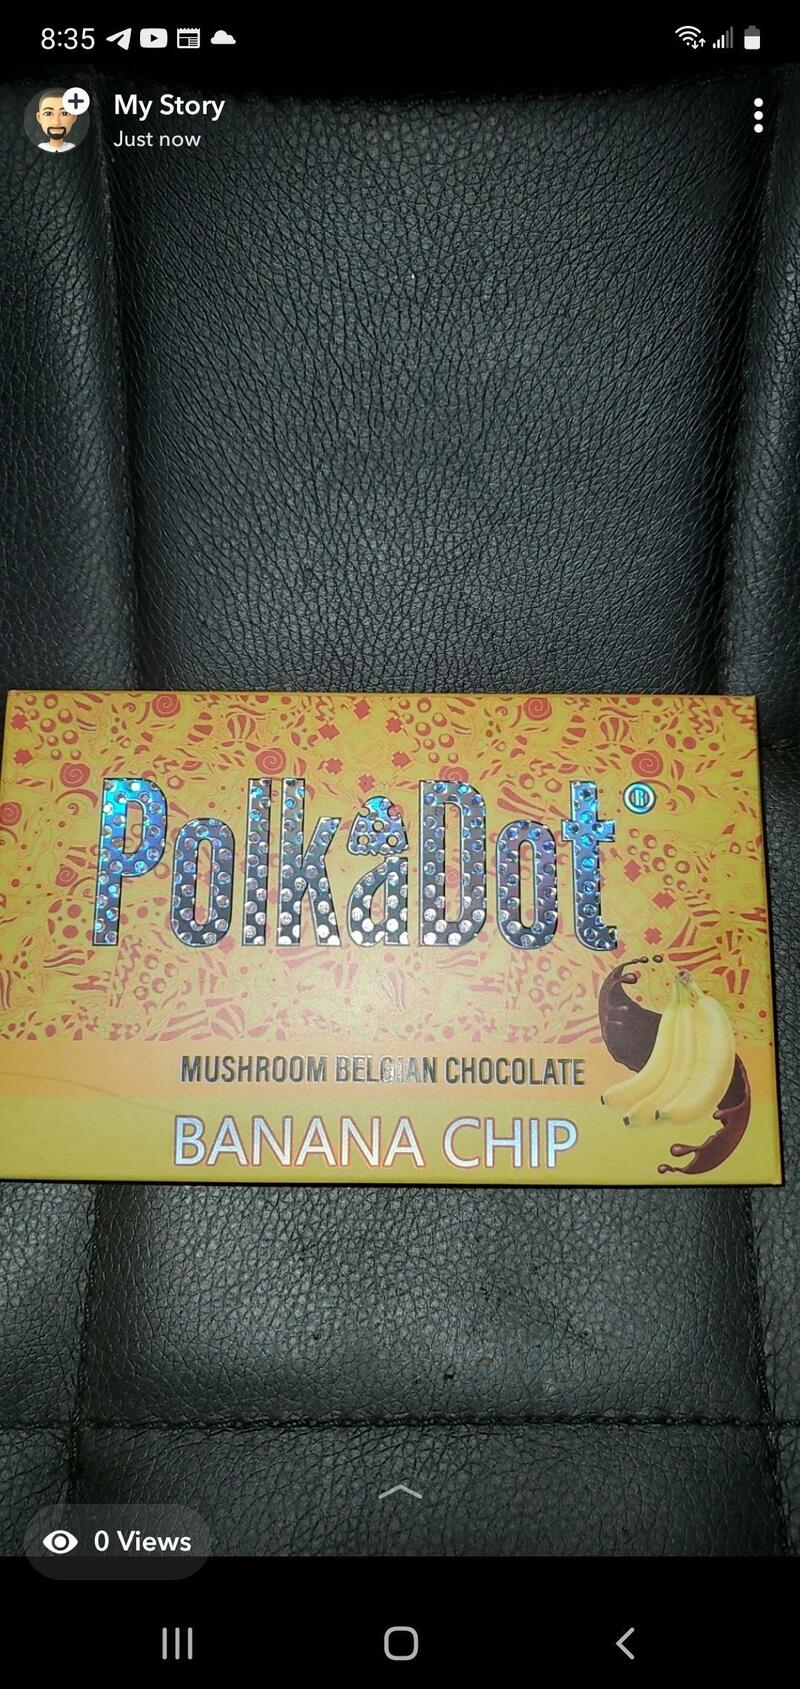 polkadot shroom bar banana